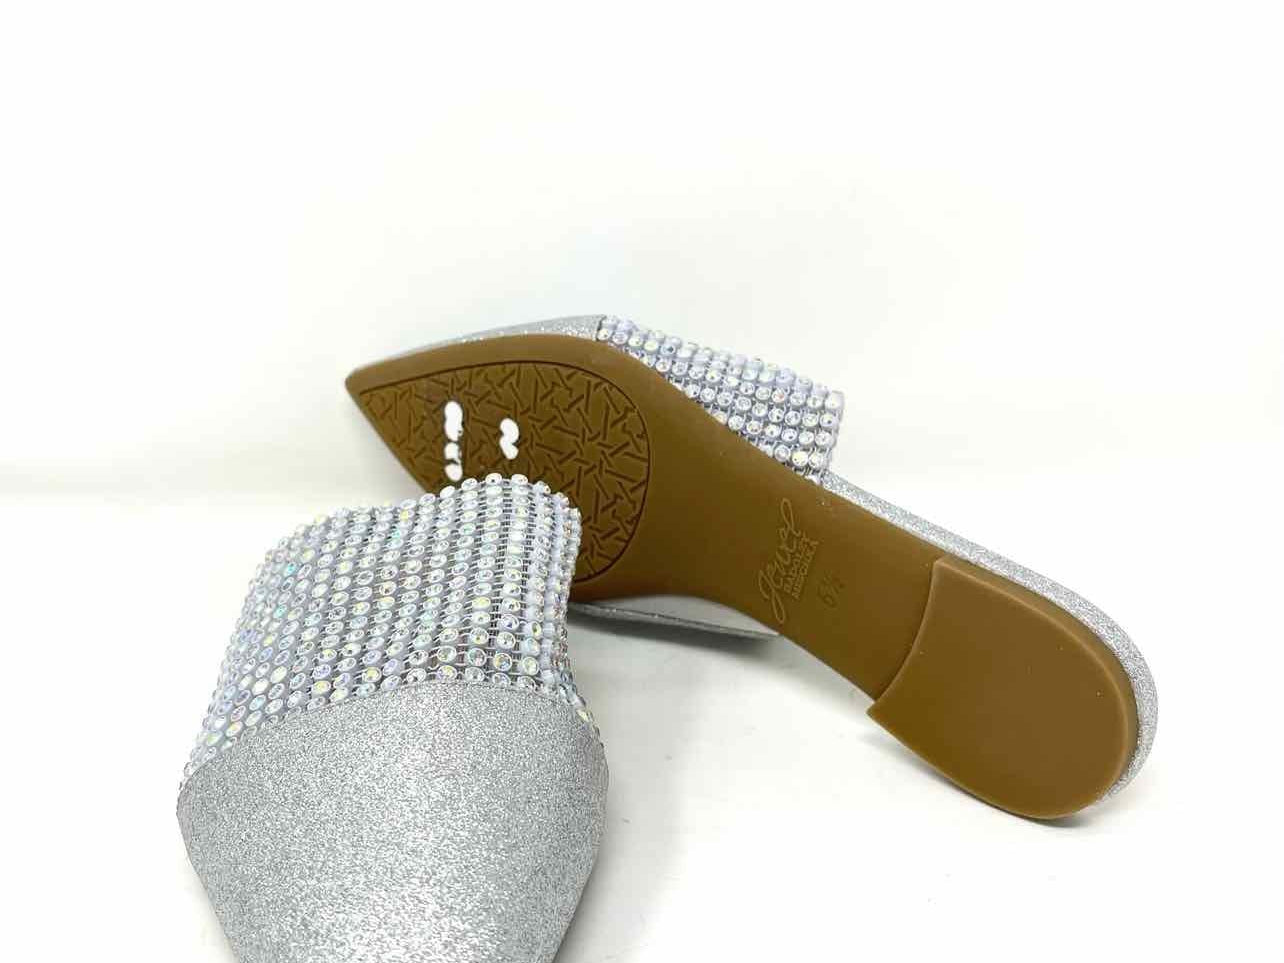 JewelBadgleyMischka Women's Silver Mule Glitter Size 6.5 Flats - Article Consignment